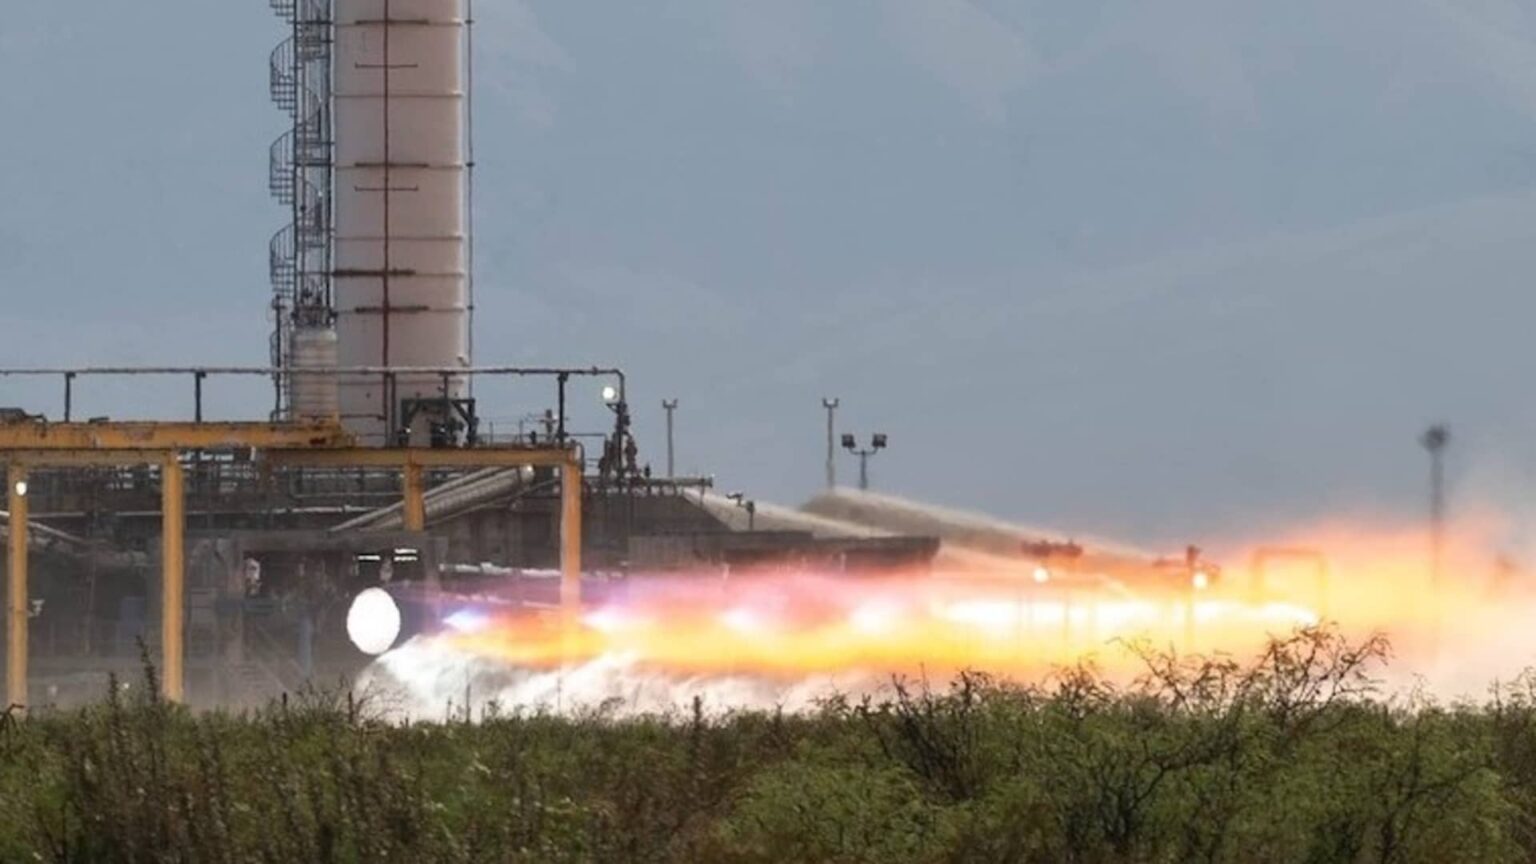 Jeff Bezos' Blue Origin BE-4 rocket engine explodes during testing